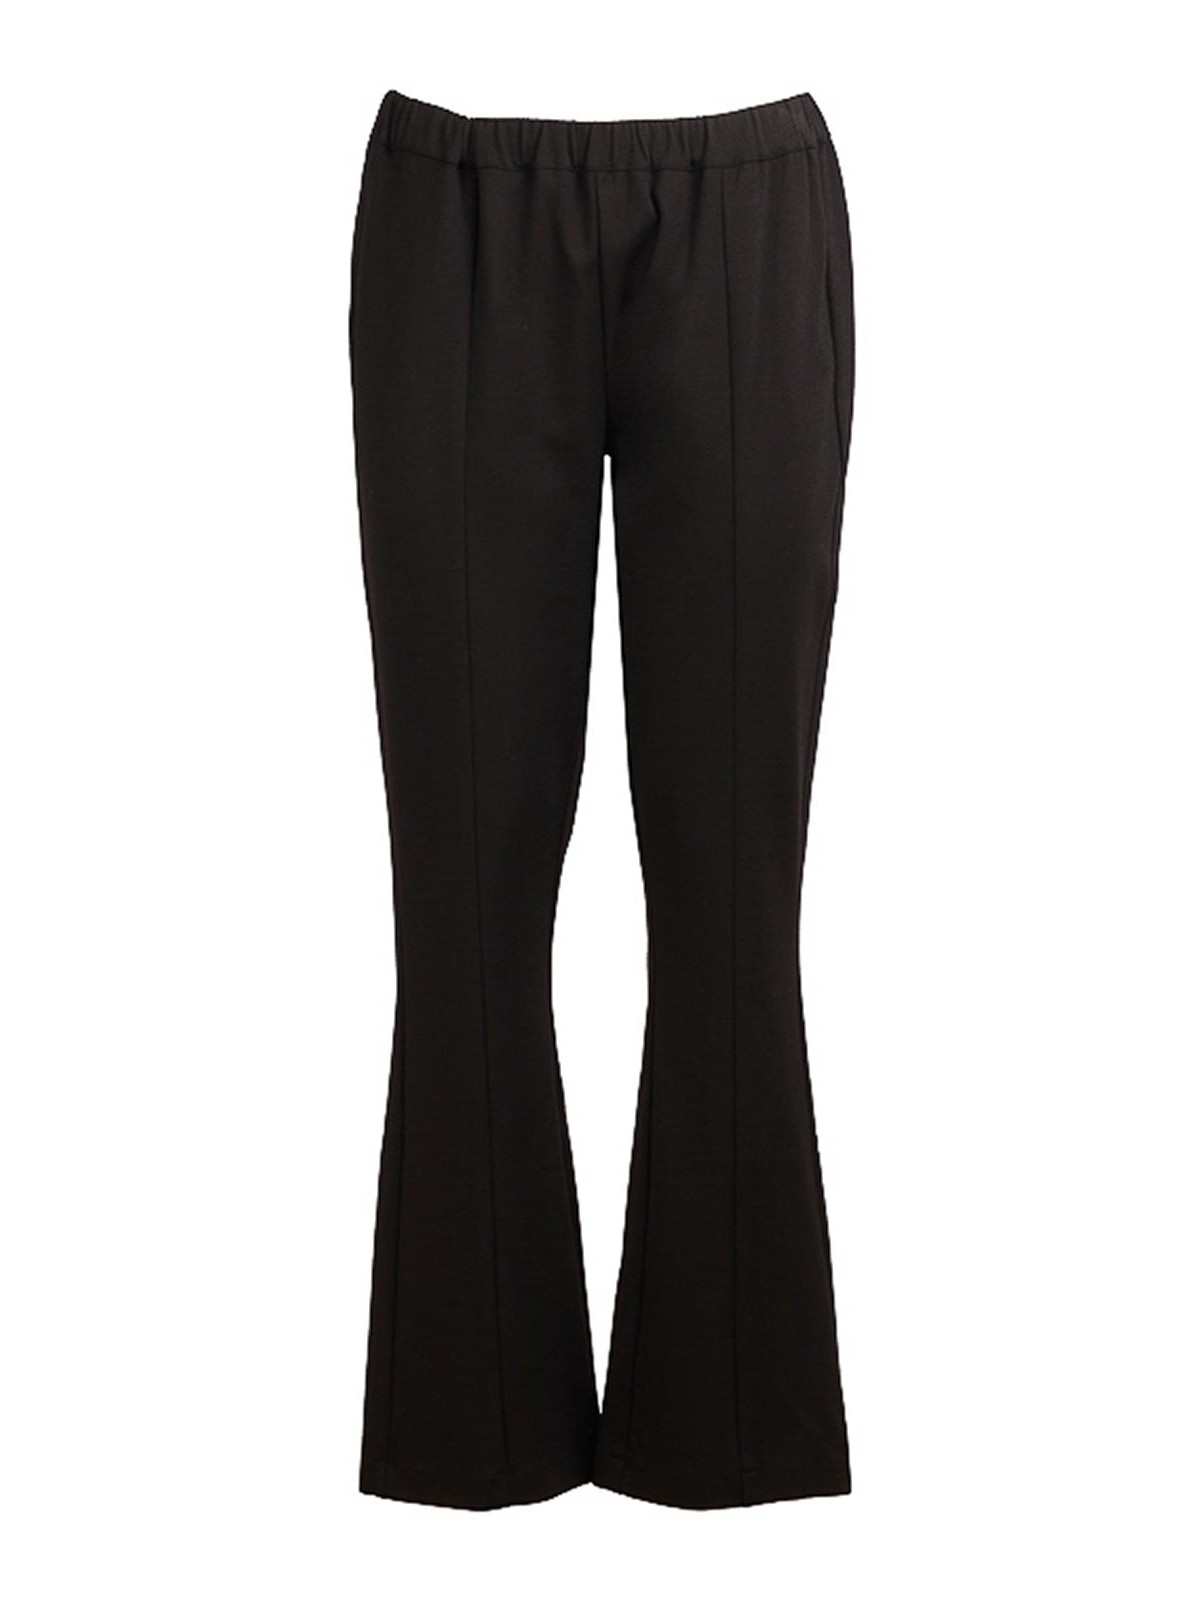 Trousers Shorts Marina Rinaldi - Ove trousers - MRM331783013OVE074